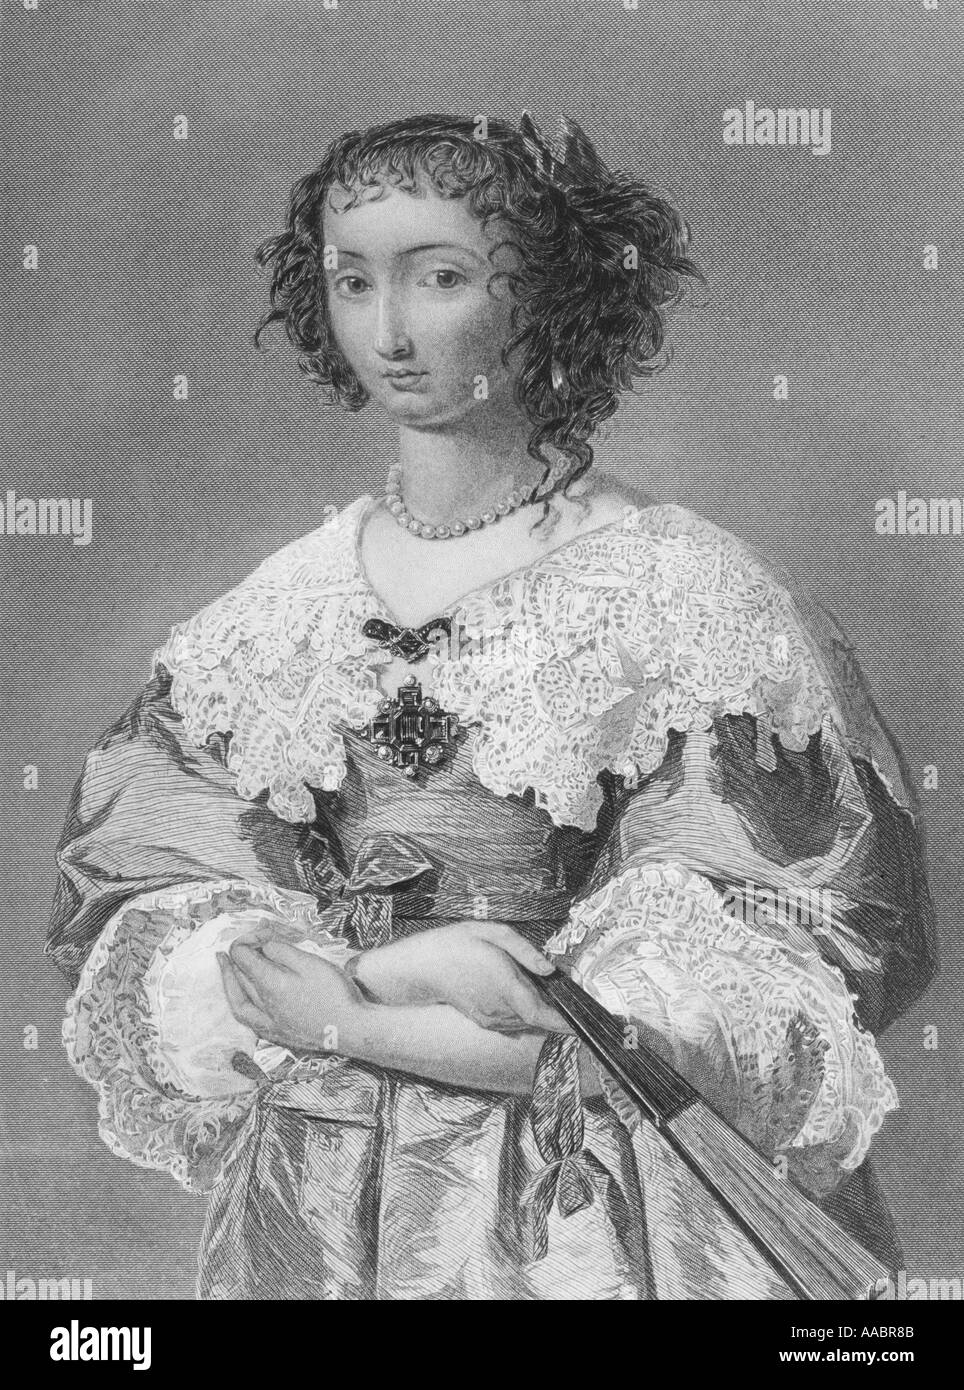 Henrietta Maria de Francia, 1609 - 1669. Reina consorte de Inglaterra, Escocia e Irlanda como la esposa del rey Carlos I. Foto de stock